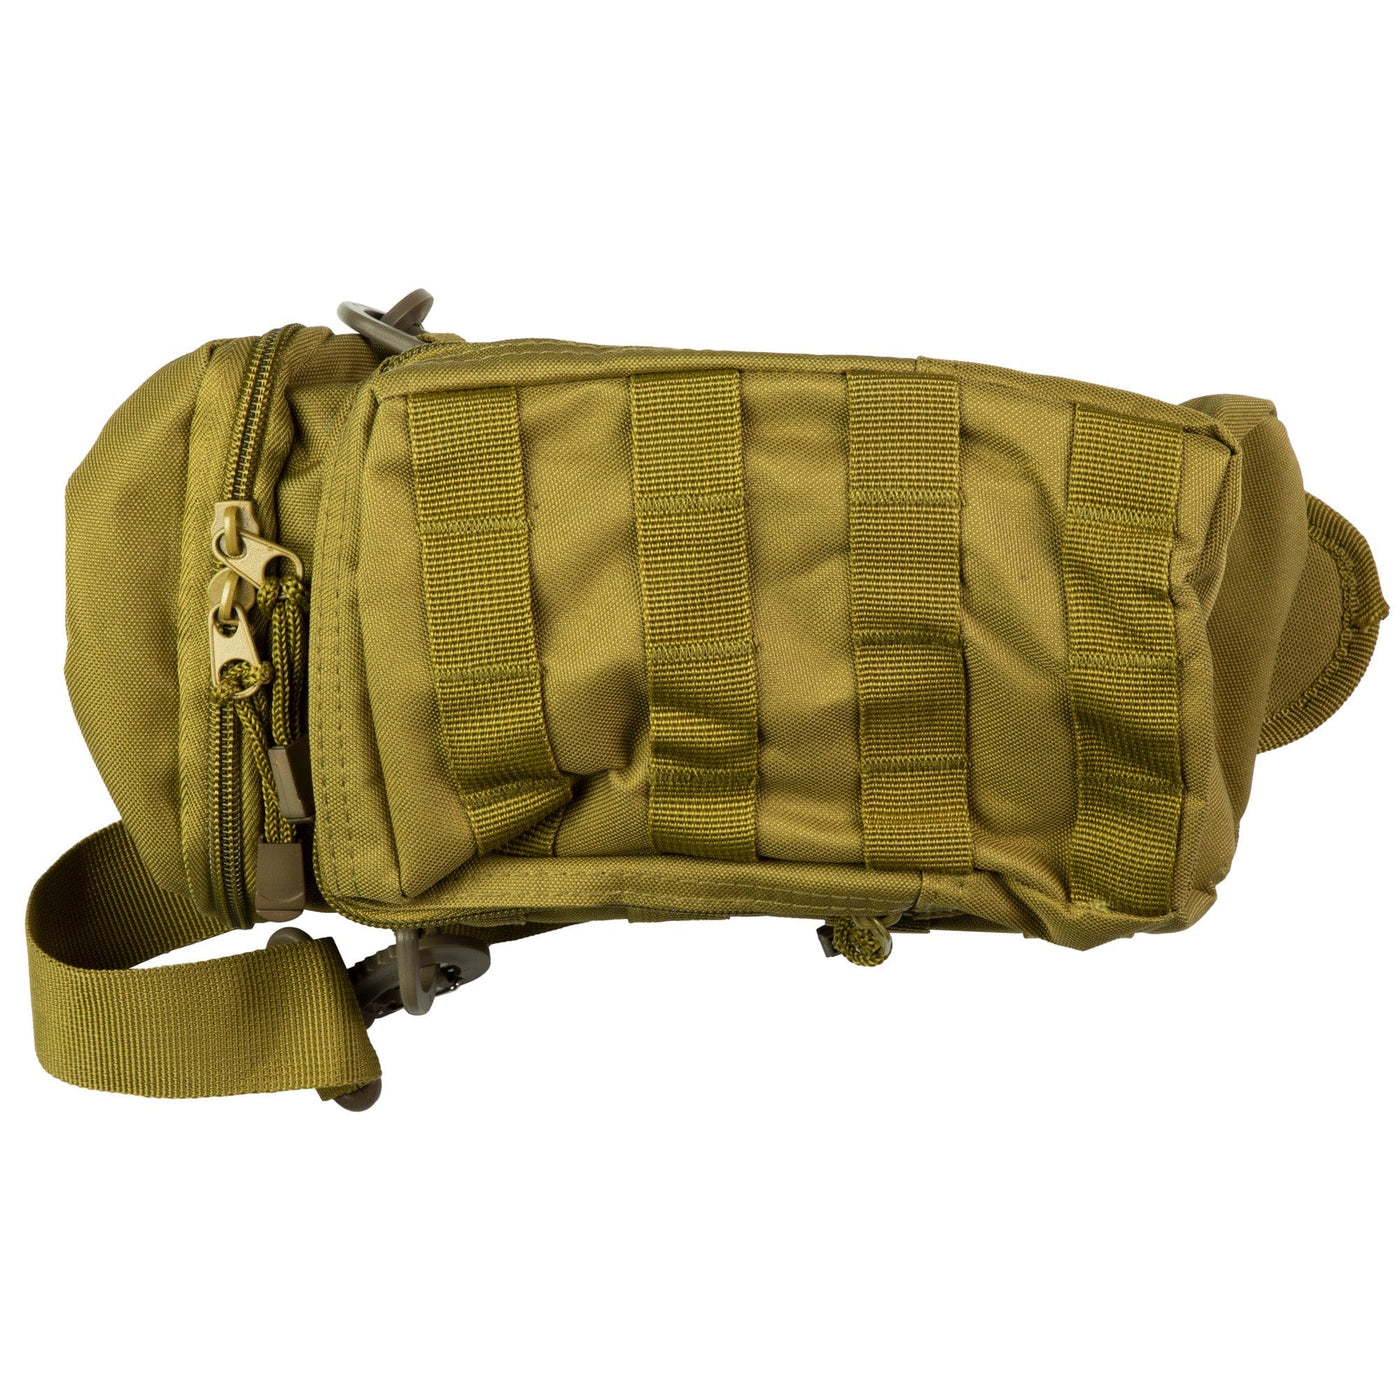 Pathfinder Pathfinder Bottle Bag Tan Soft Gun Cases